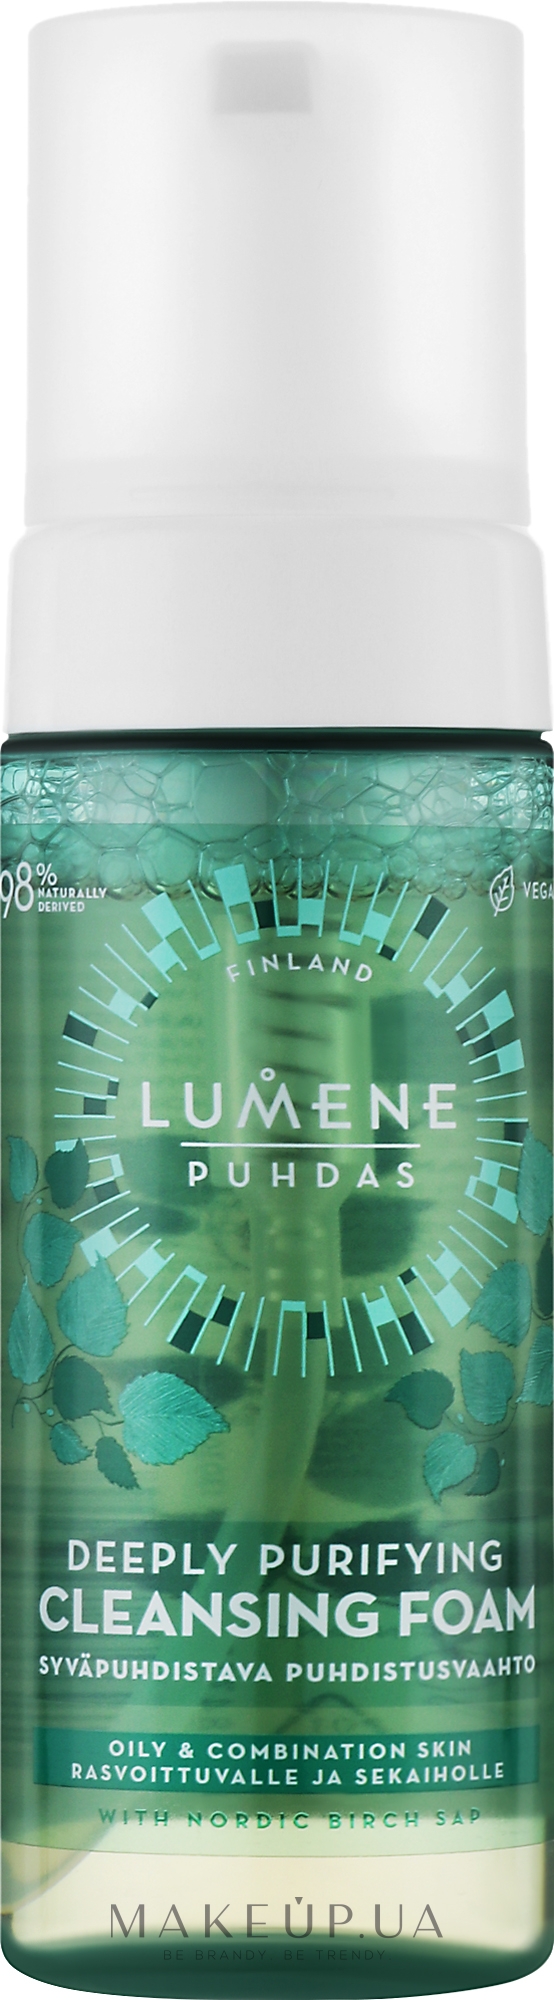 Глубоко очищающая пенка для умывания - Lumene Puhdas Deeply Purifying Cleansing Foam — фото 150ml